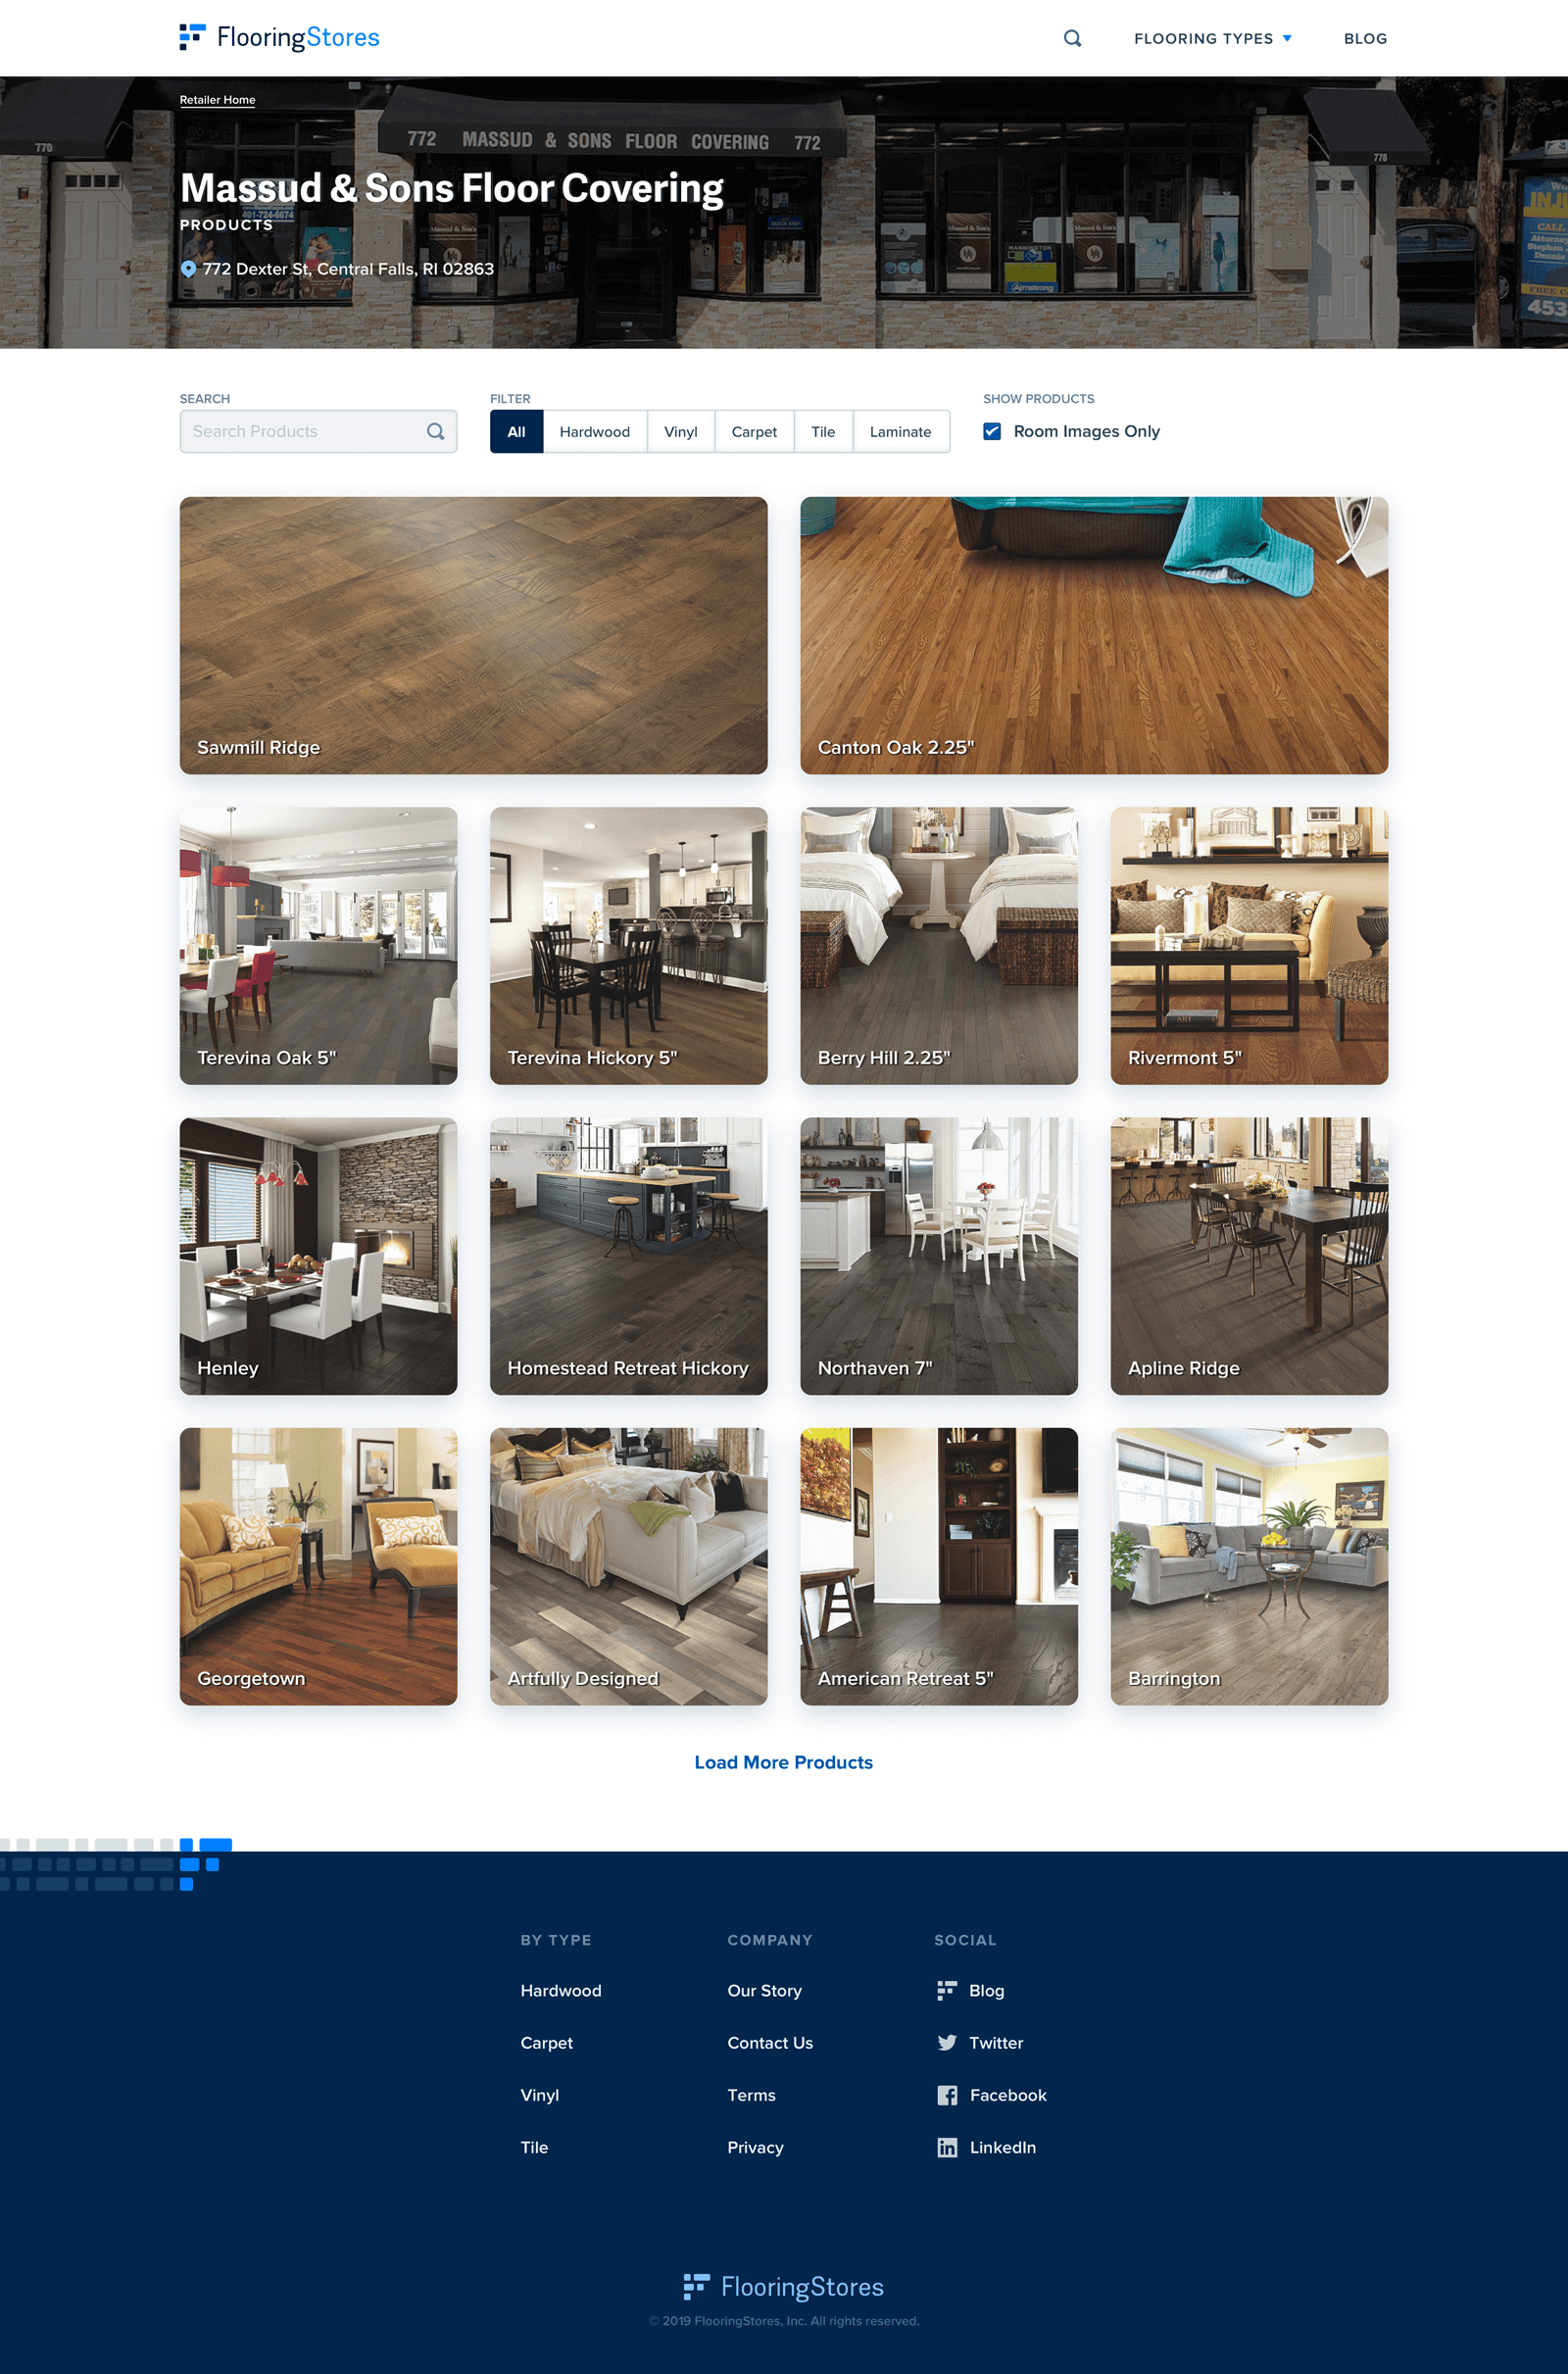 FlooringStores - Retailer Page